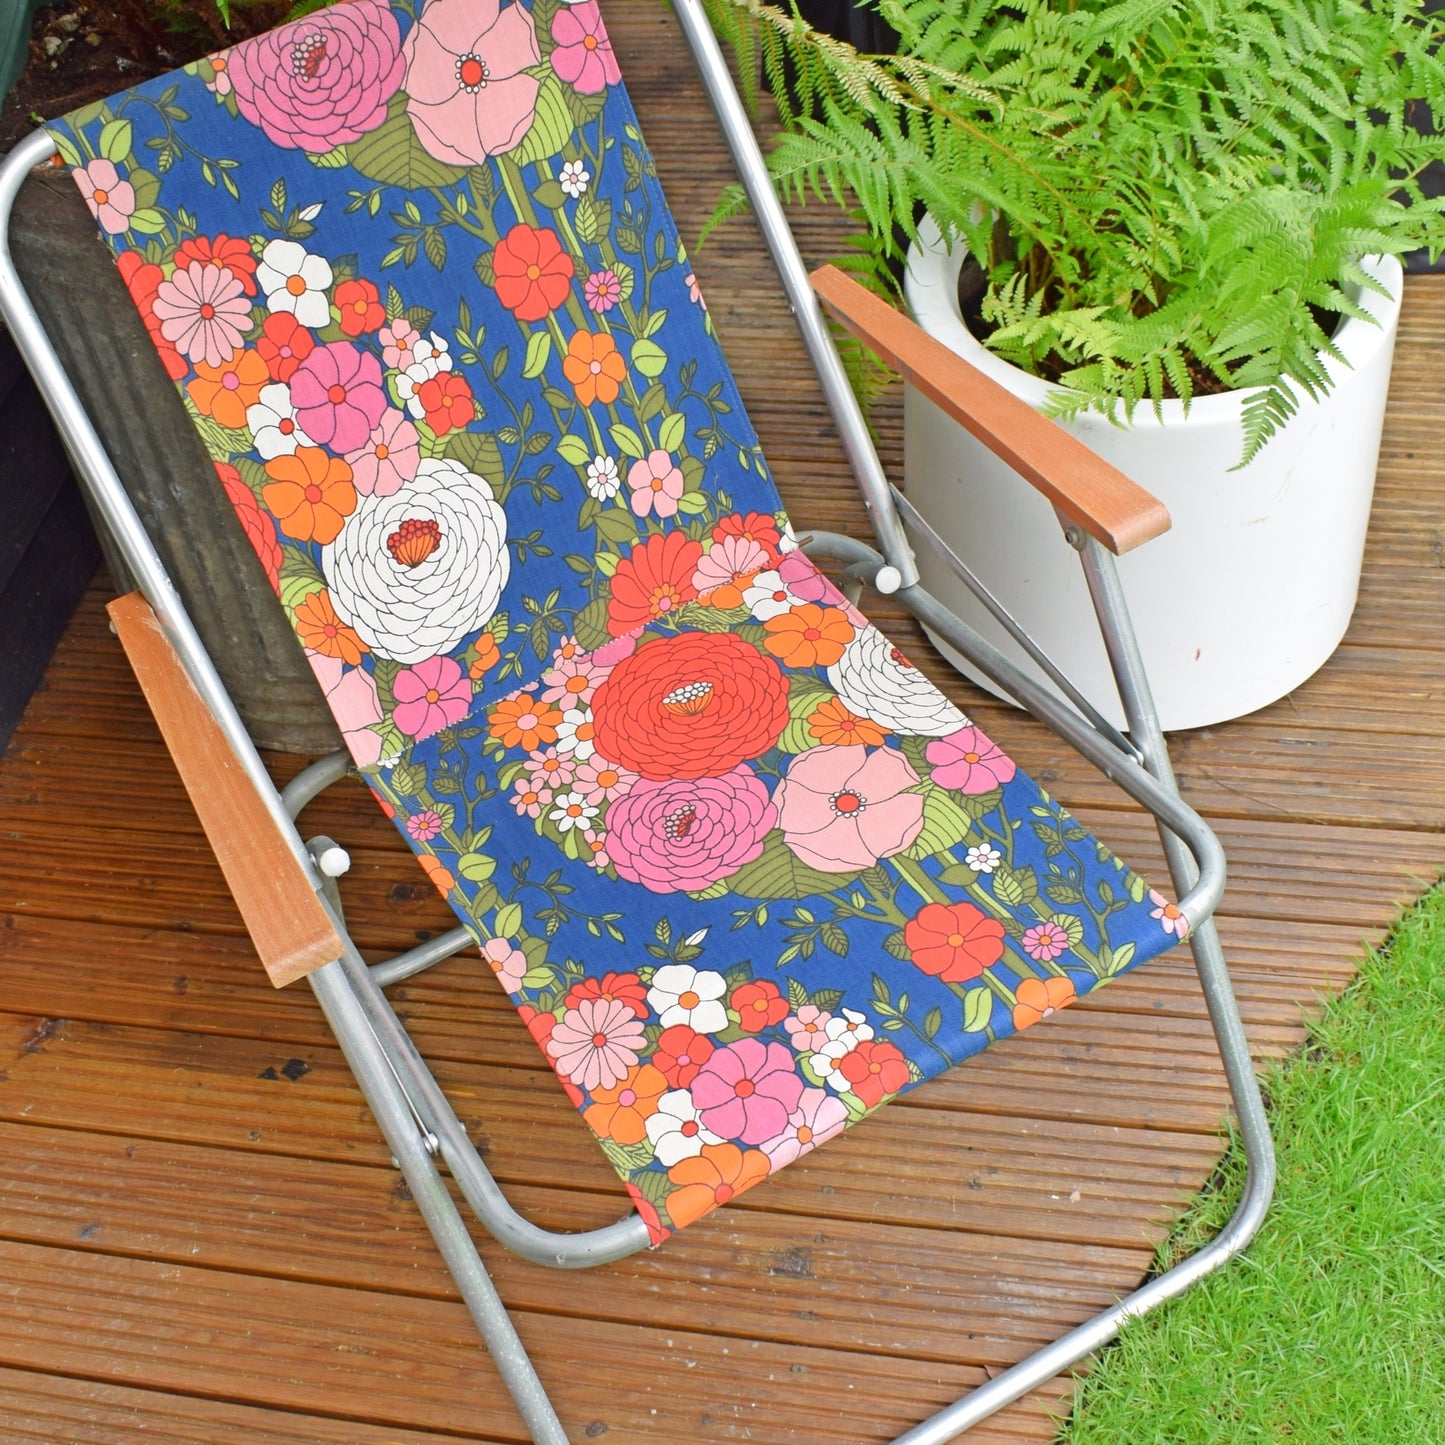 Vintage 1960s Folding Garden Chair - Flower Power - Blue